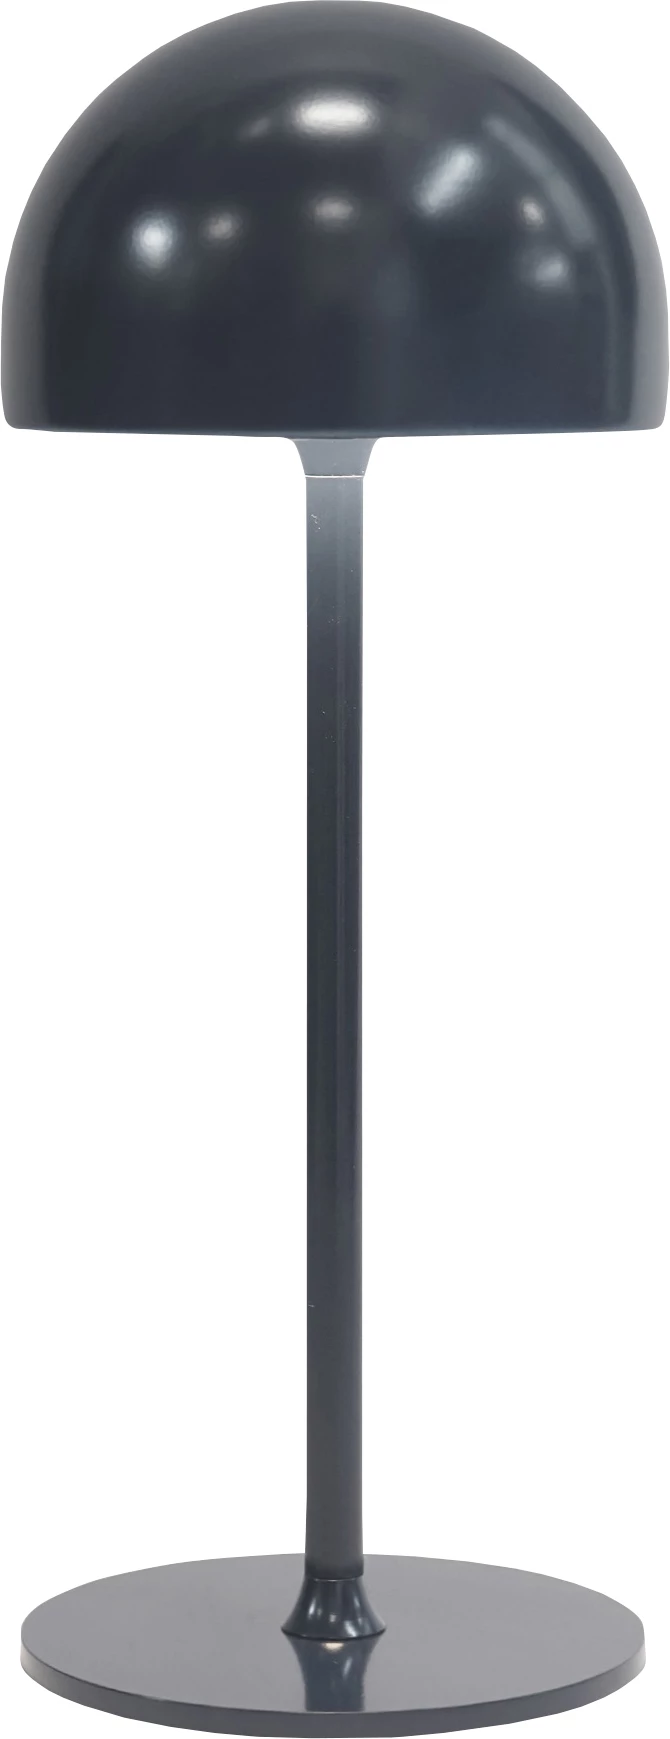 Sirius Tim lampe, grå, H30 cm